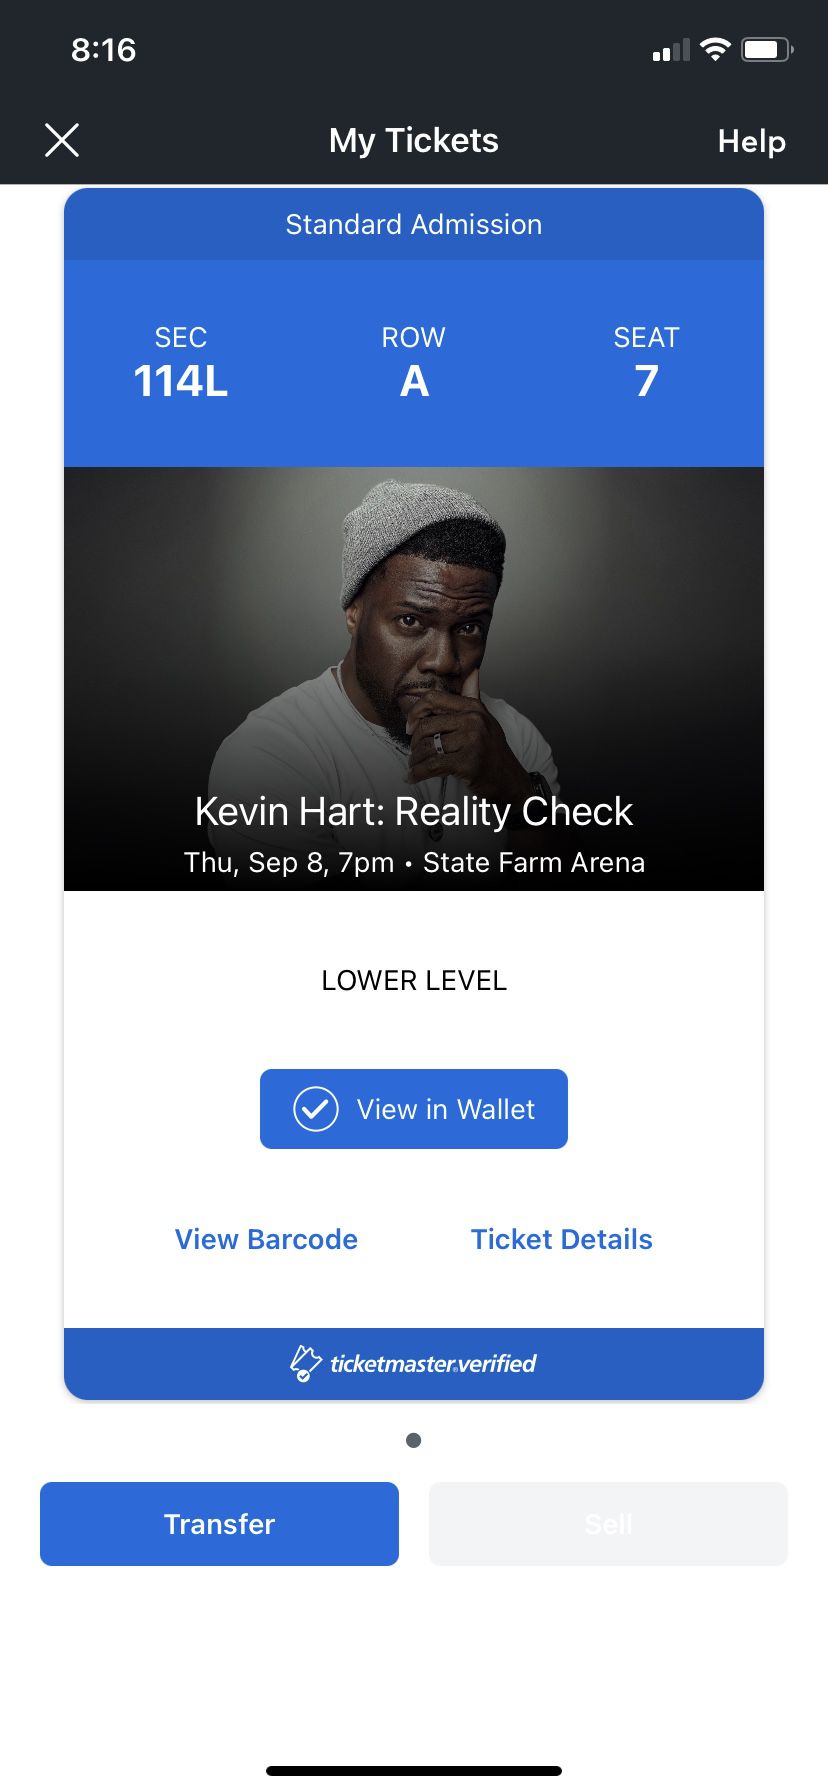 Kevin Hart Ticket